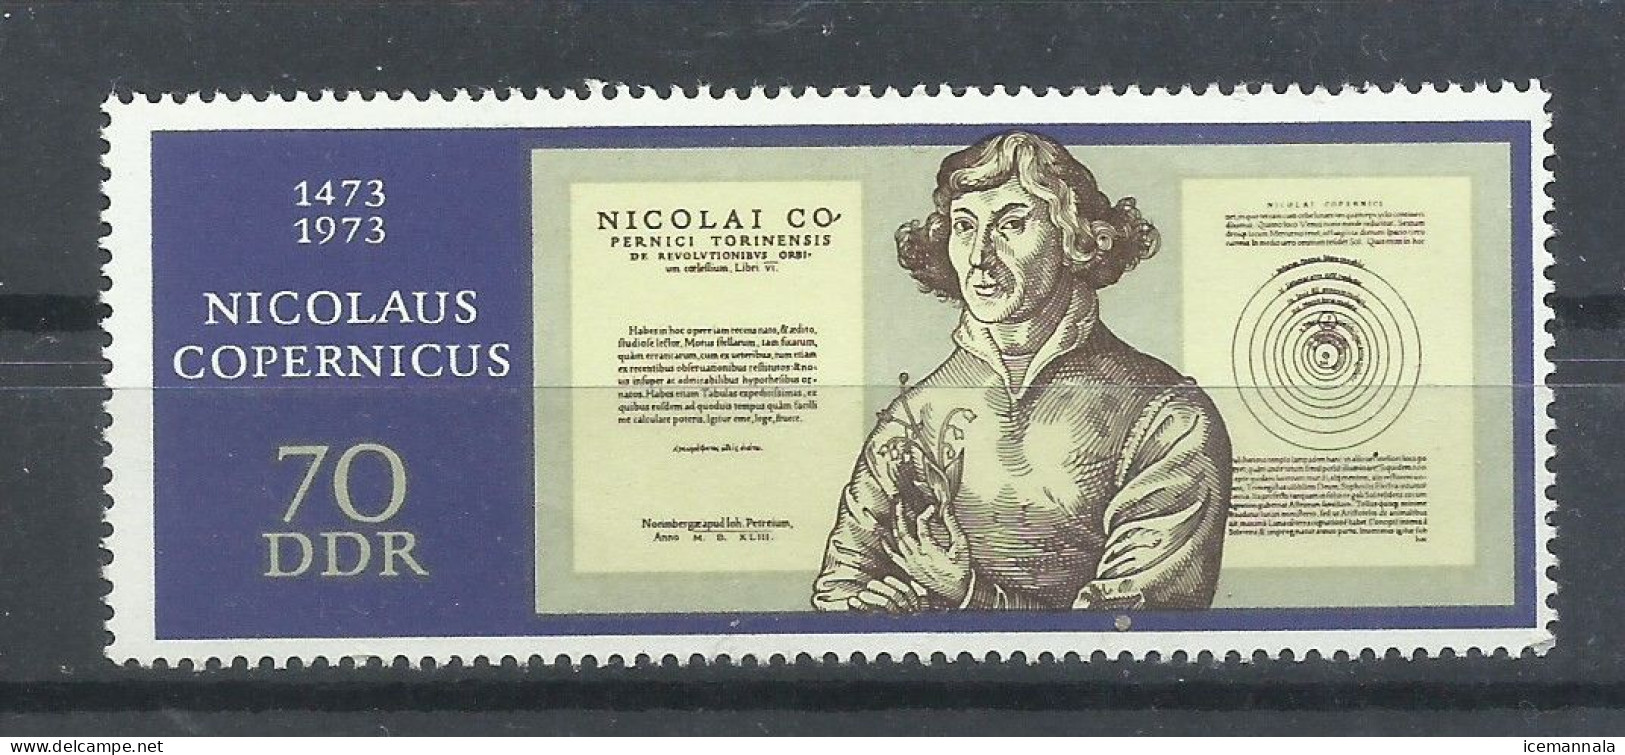 ALEMANIA   ORIENTAL   YVERT  1525  MNH  ** - Unused Stamps